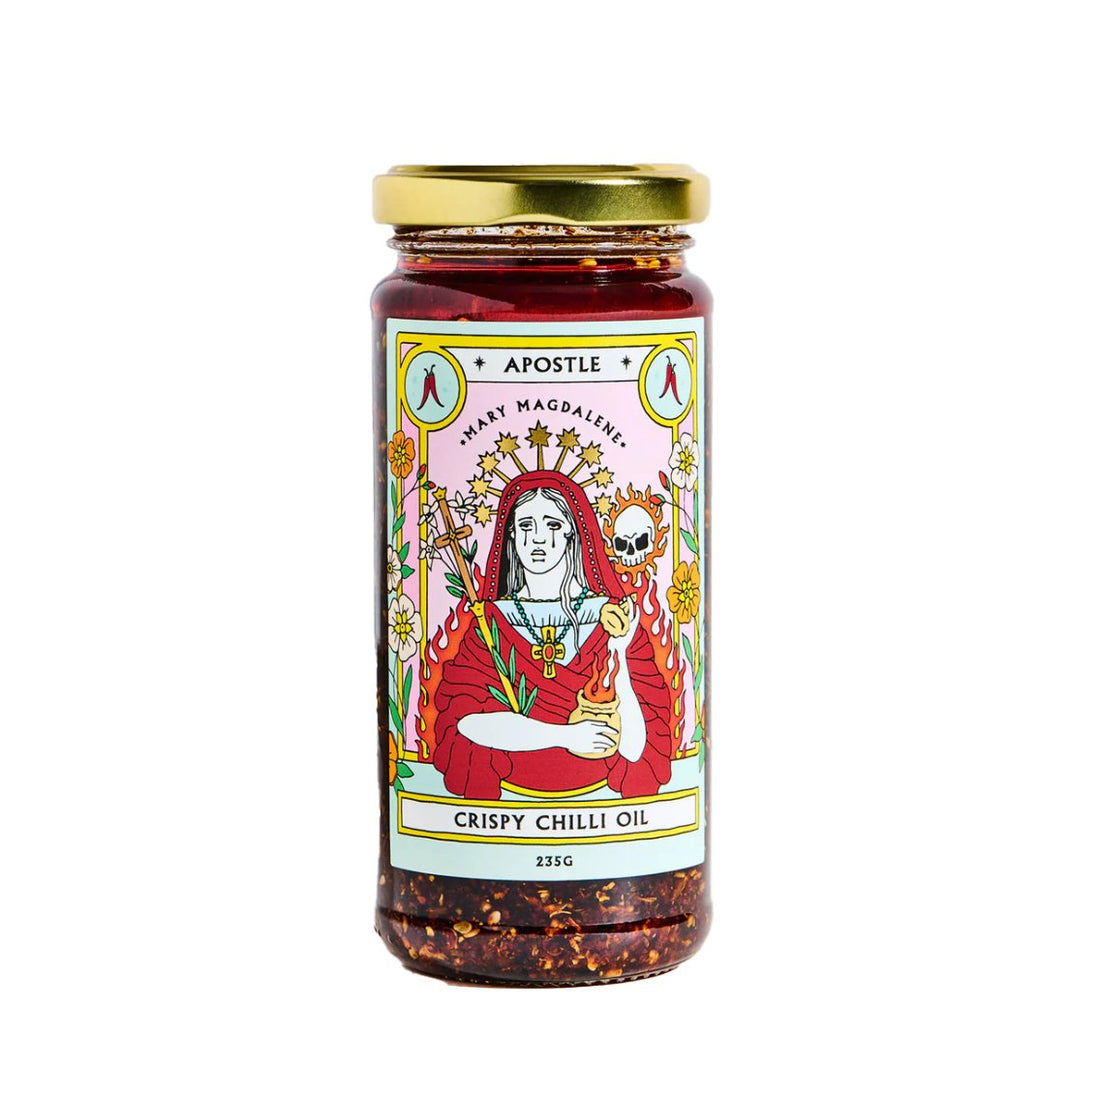 Apostle Hot Sauce - Mary Magdalene Crispy Chilli Oil - The Flower Crate